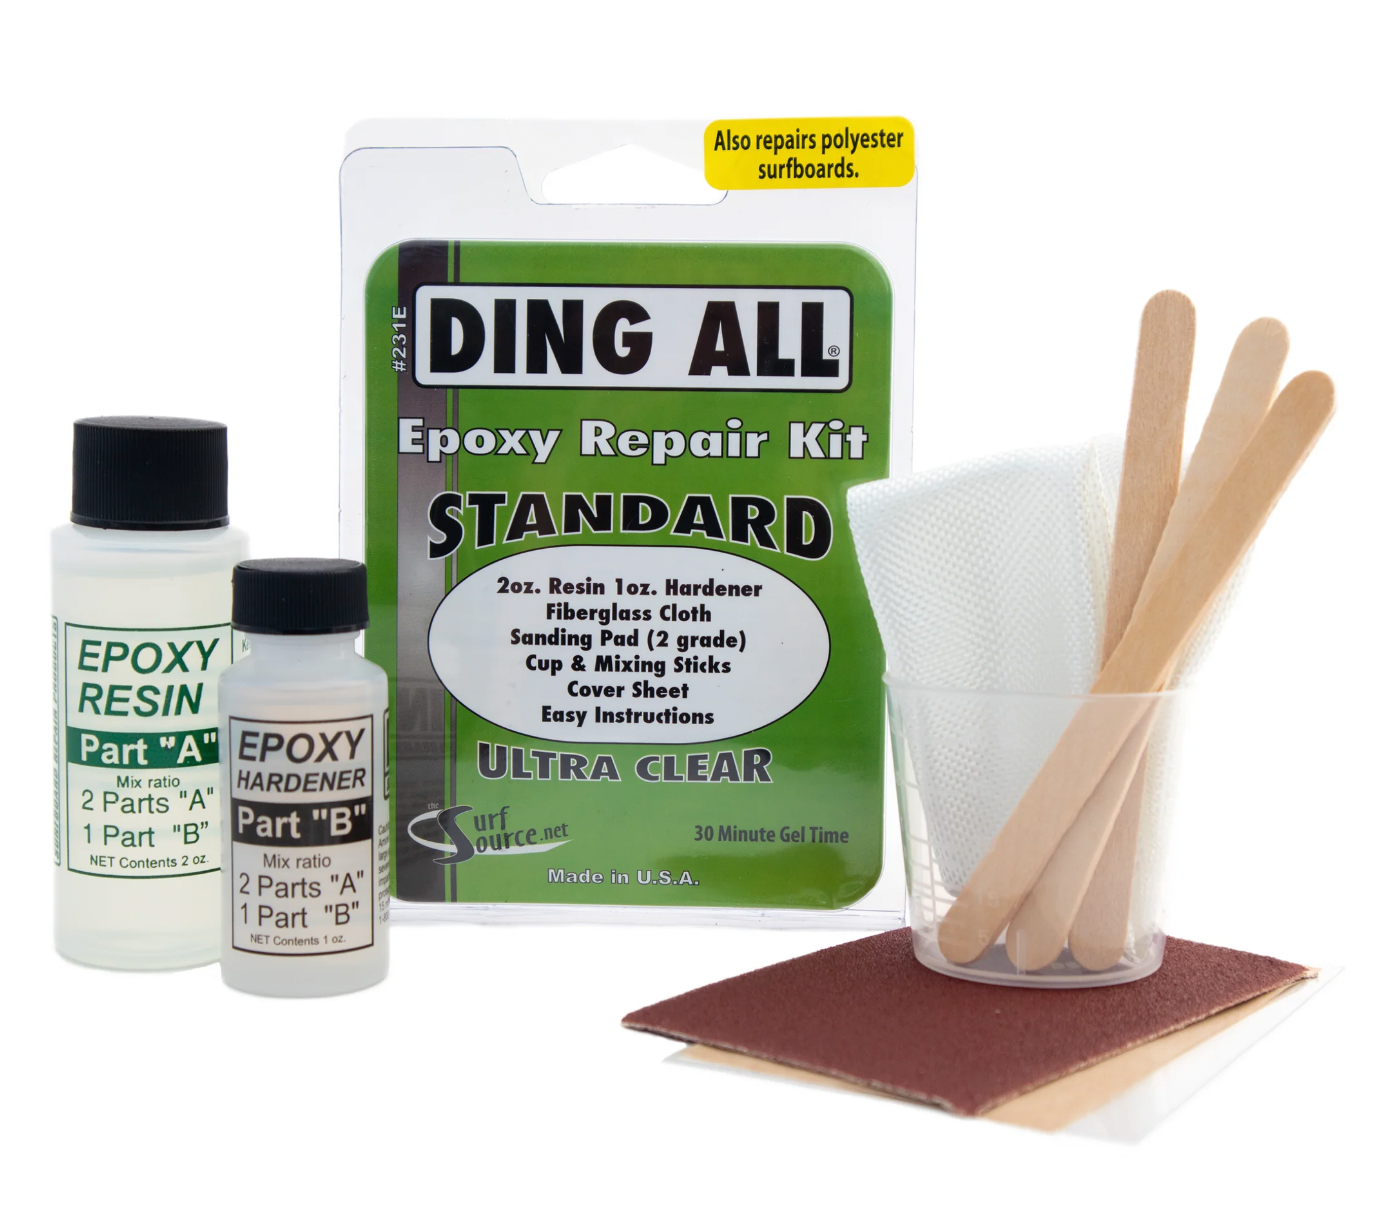 Ding all Epoxy repair kit Standard